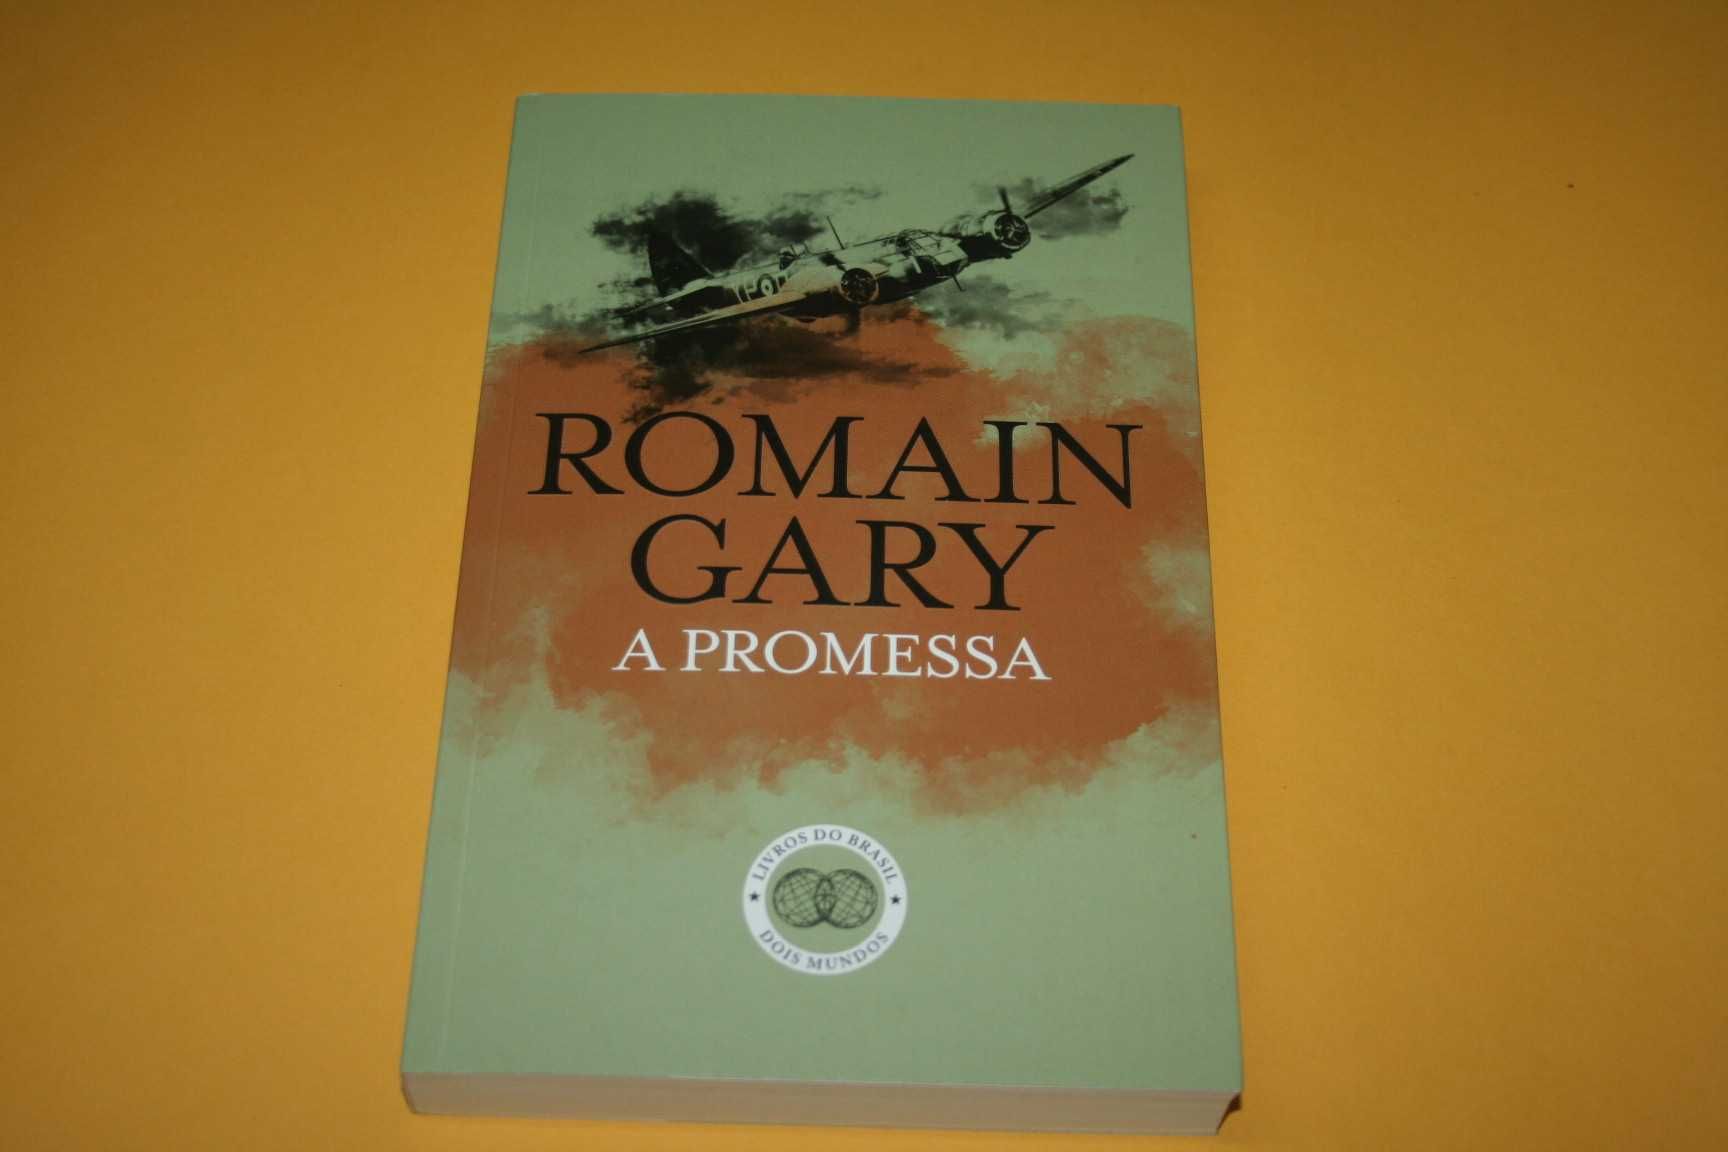 [] A Promessa, Romain Gary